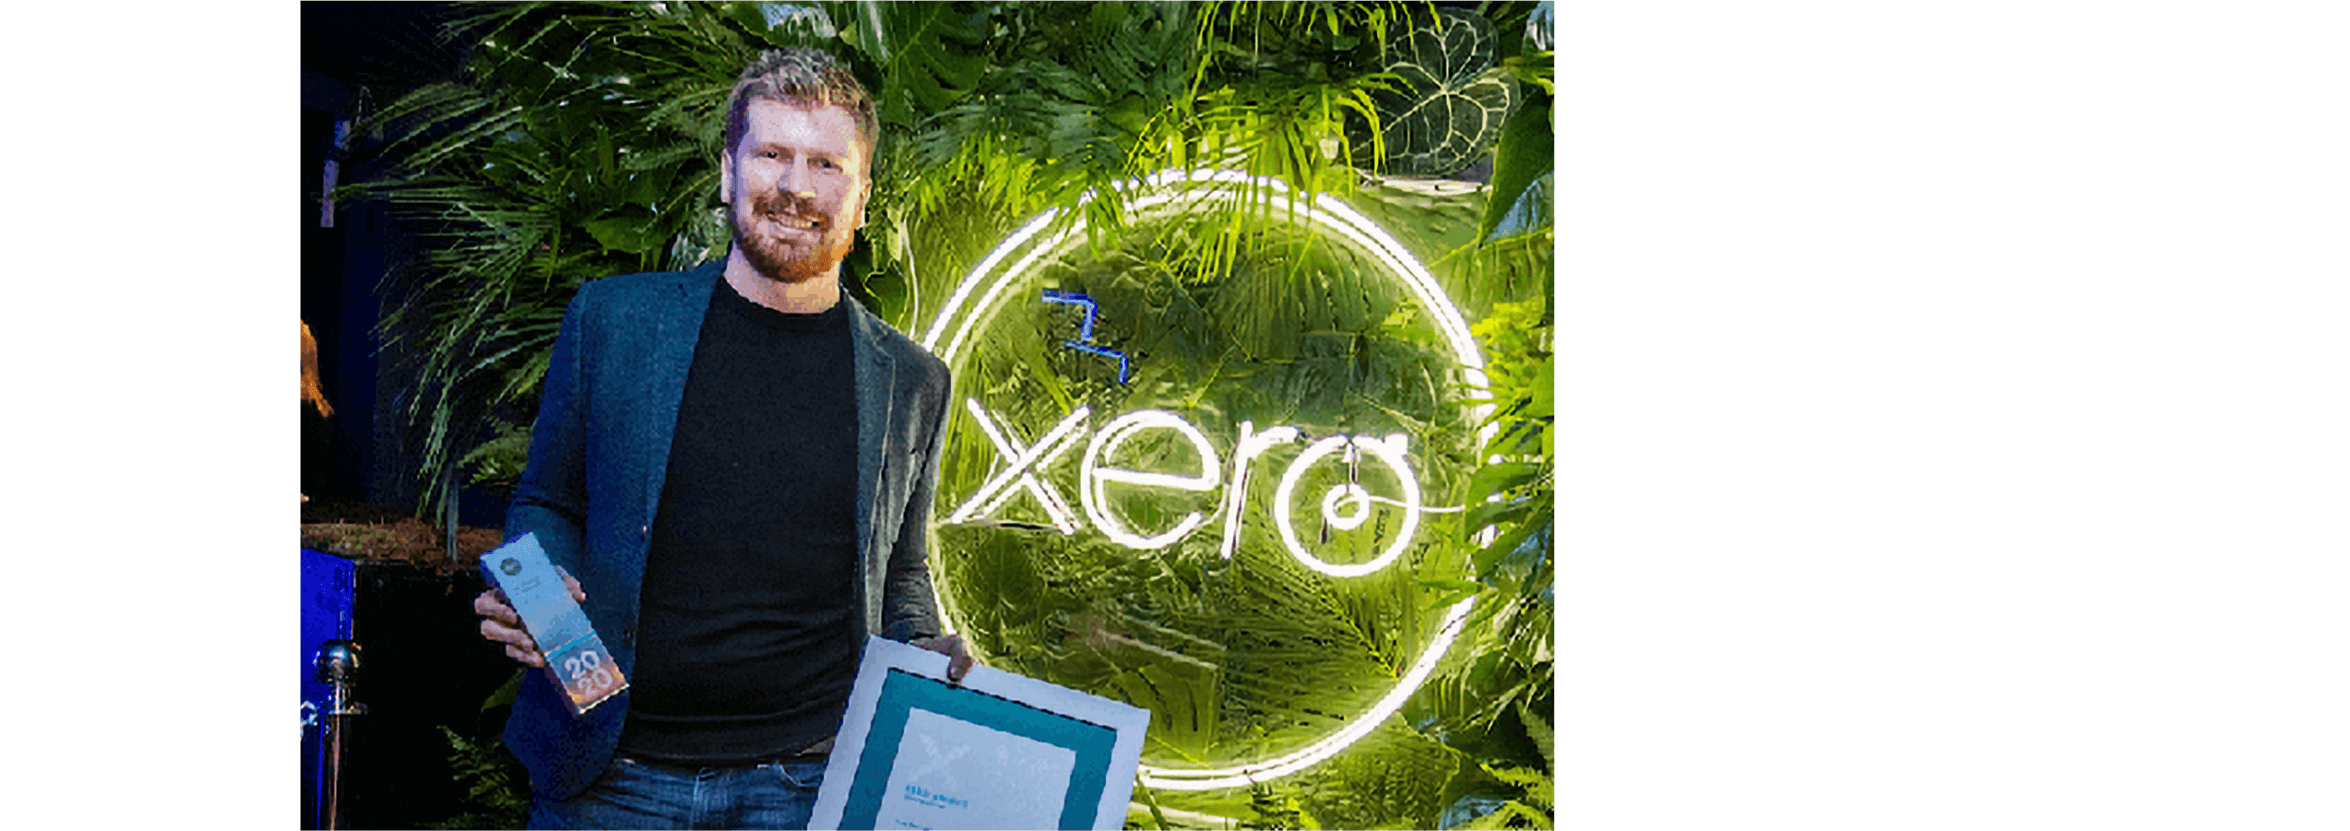 Jonathan Bareham from Raedan celebrates winning the Xero’s Most Valued Professional award.